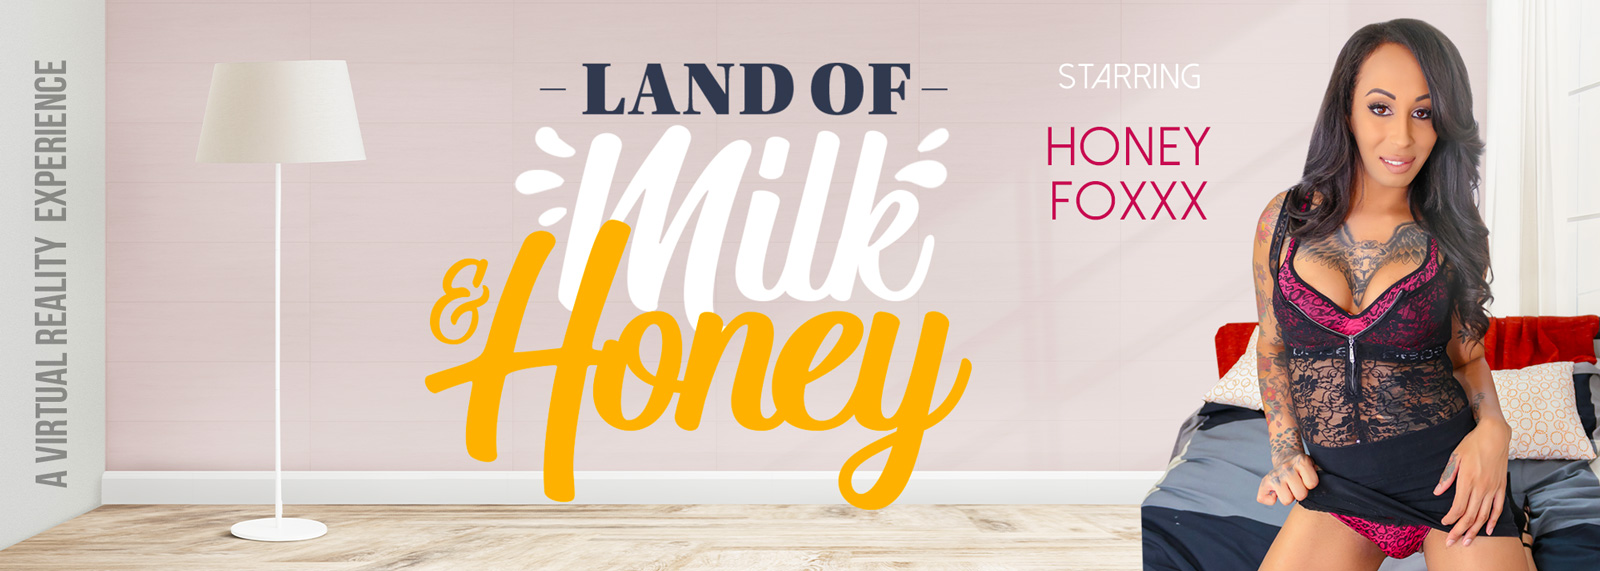 Land of Milk and Honey - VR Porn Video, Starring: Honey Foxxx VR